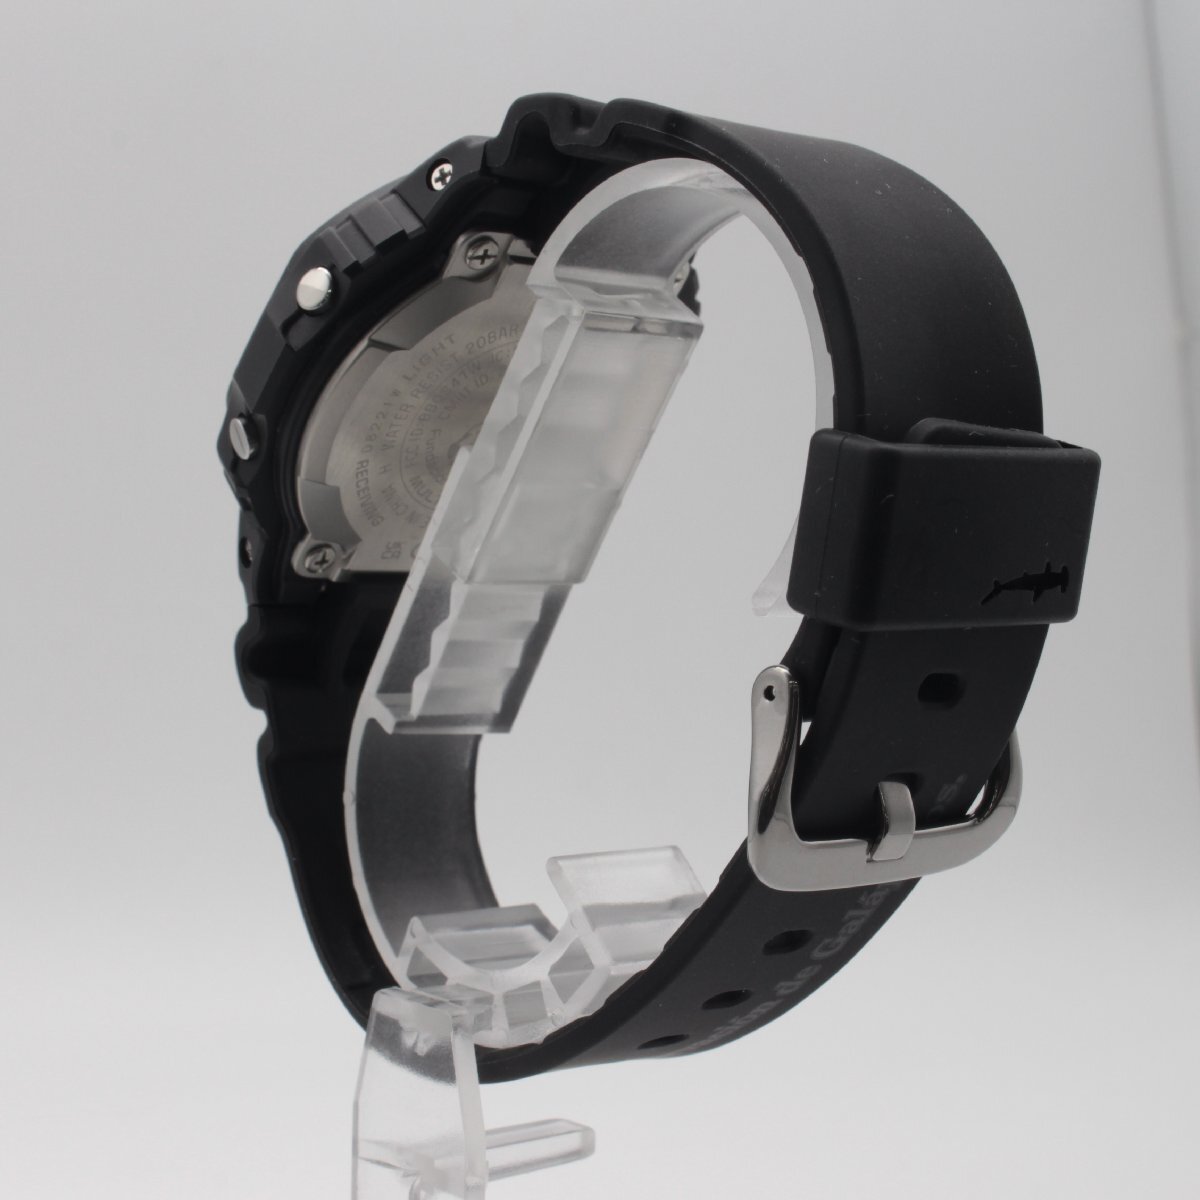 2702▲ CASIO 腕時計 G-SHOCK GW-B5600CD-1A2JR 20気圧防水 耐衝撃性 電波 ソーラー Bluetooth チャールズ・ダーウィン財団モデル【0311】_画像5